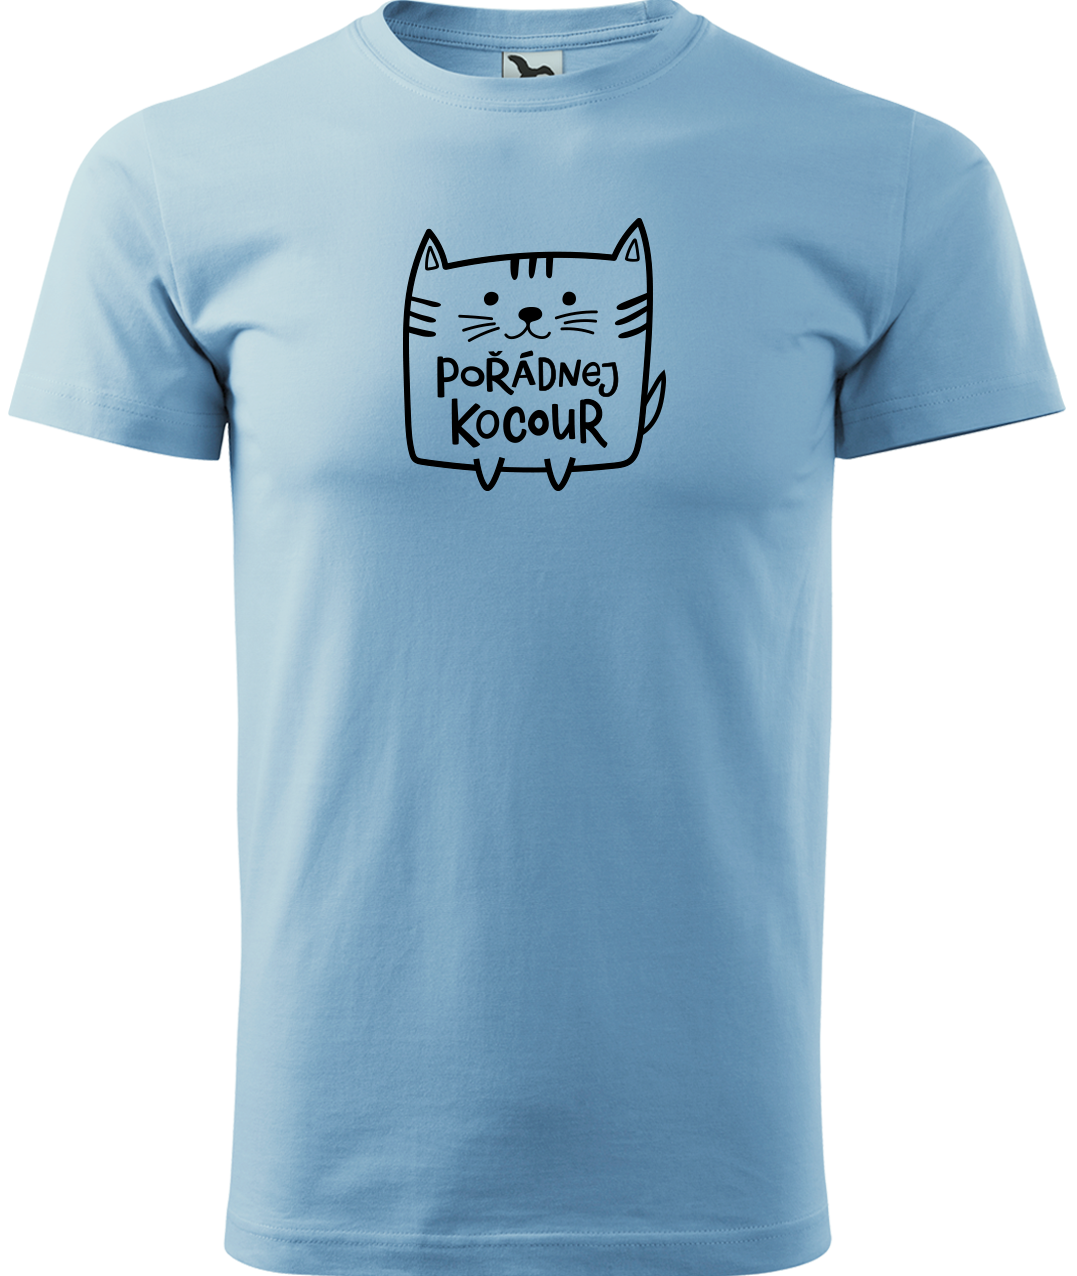 Pánské tričko s kočkou - Pořádnej kocour Velikost: S, Barva: Nebesky modrá (15)